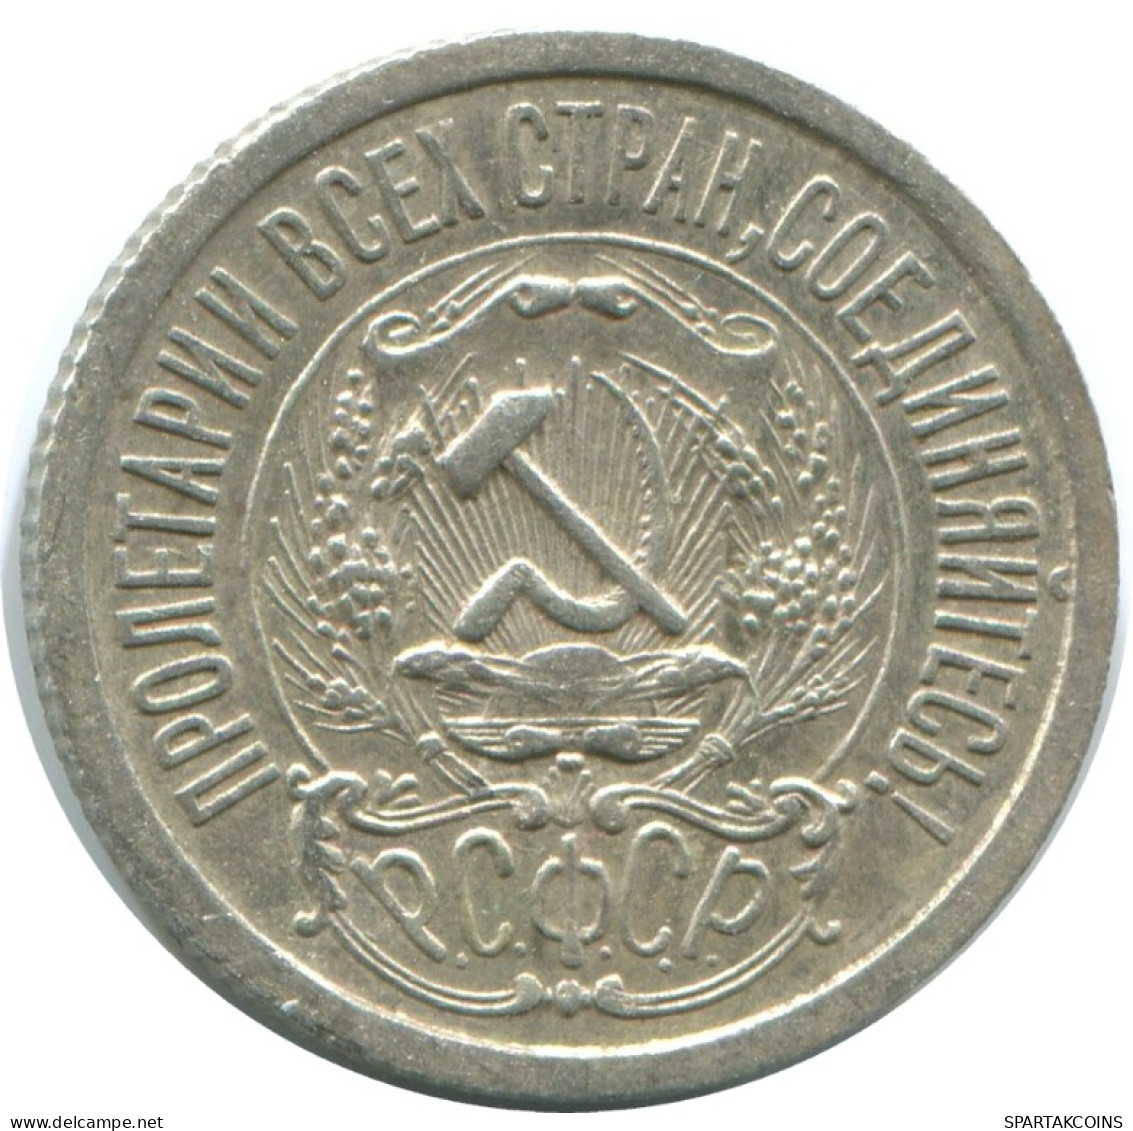 15 KOPEKS 1923 RUSSIA RSFSR SILVER Coin HIGH GRADE #AF072.4.U.A - Russia